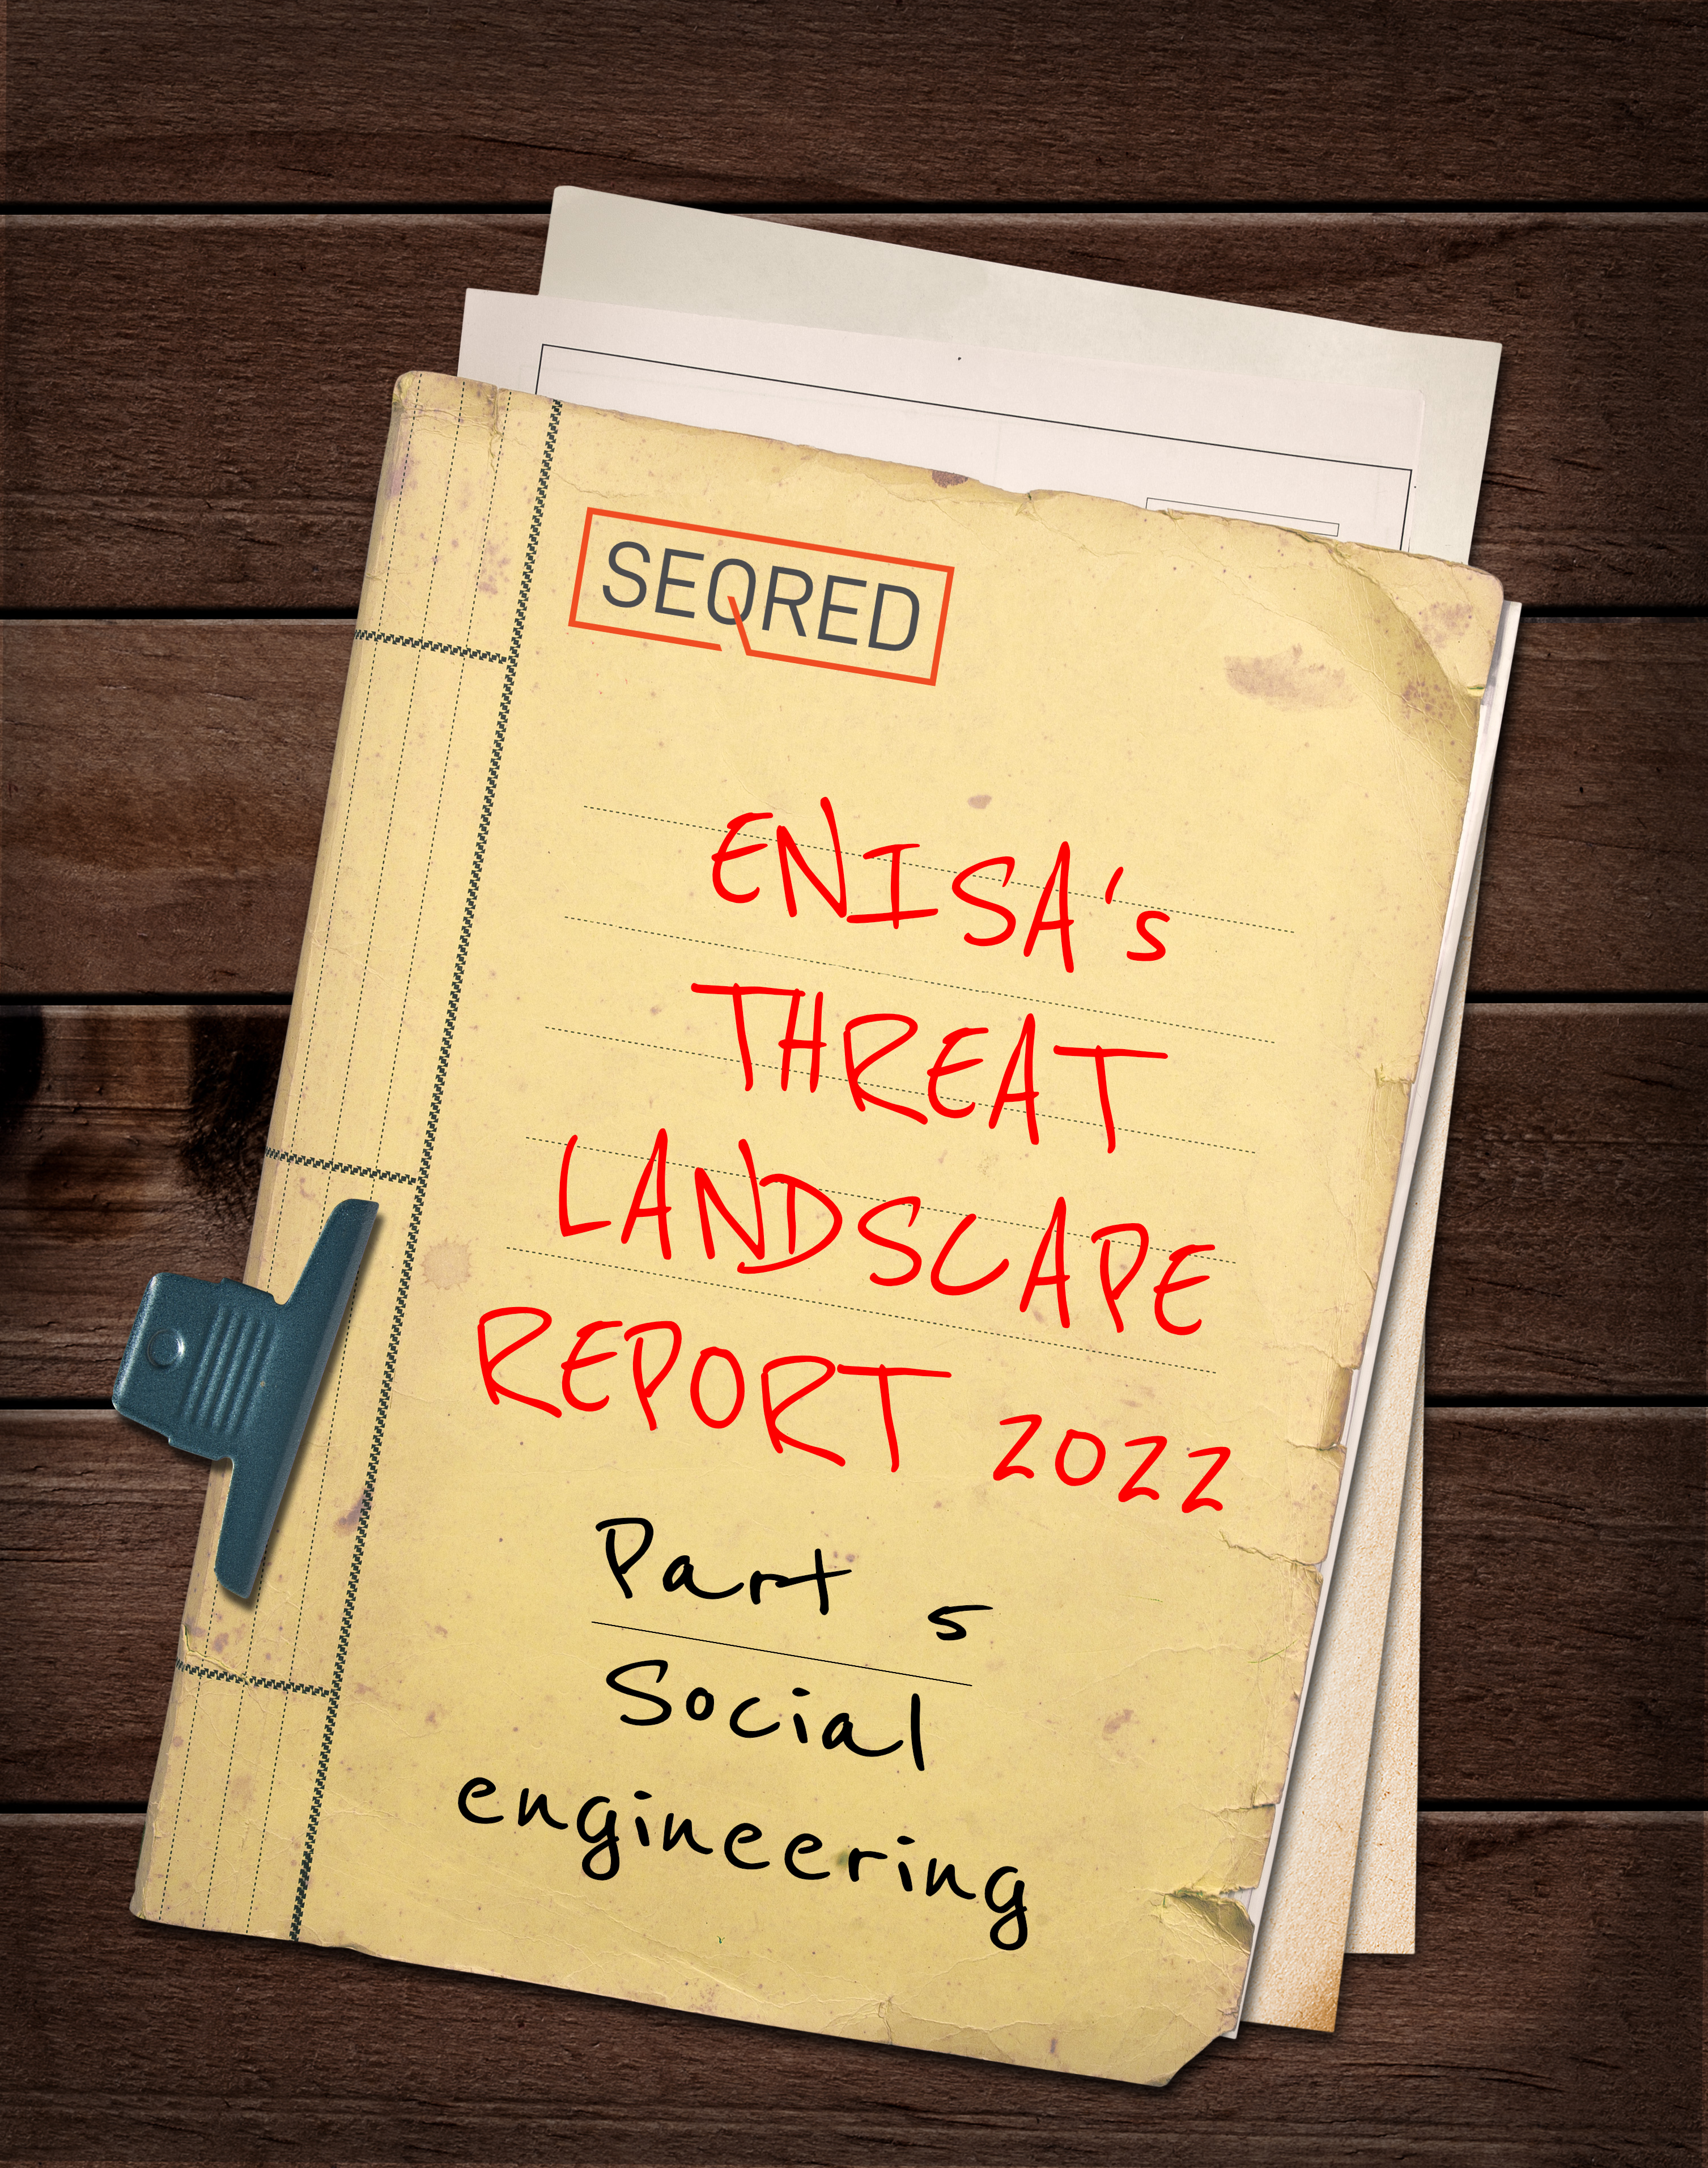 Enisa's Threat Landscape Report 2022 Part 5 Social Engineering